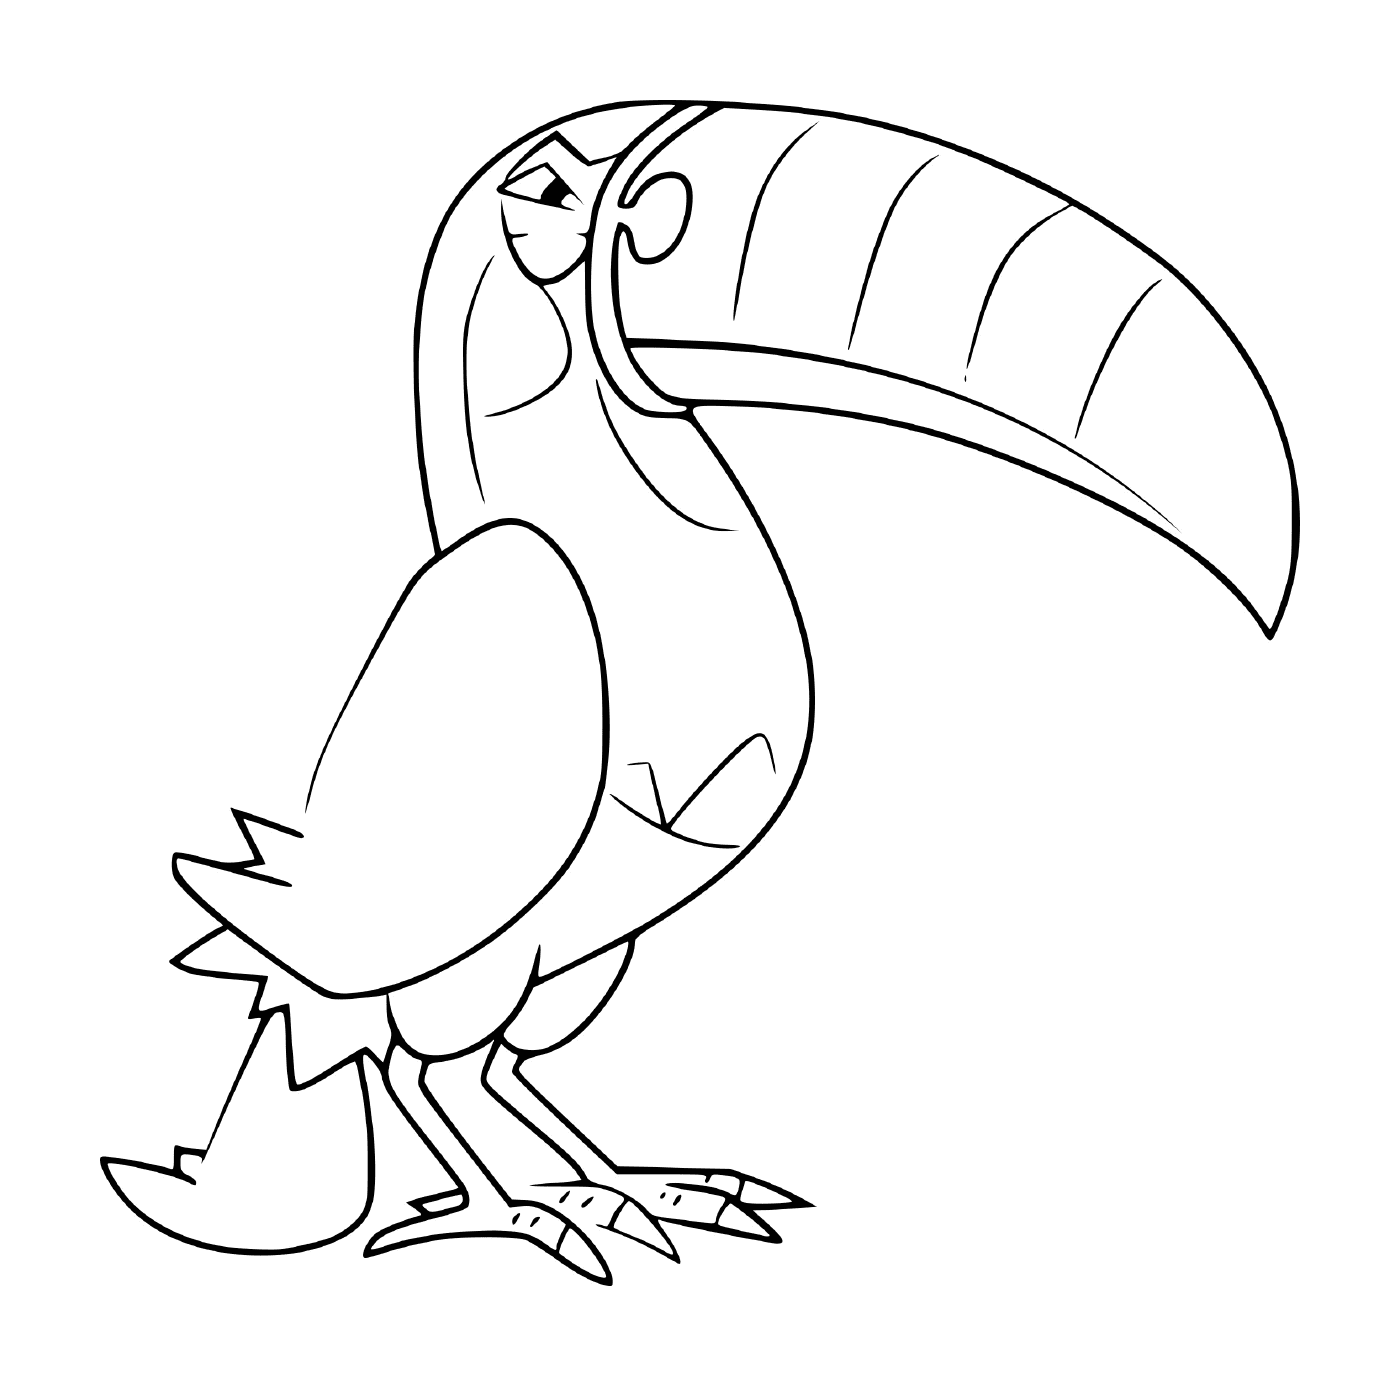  Bazoucan, majestoso pássaro tucano 